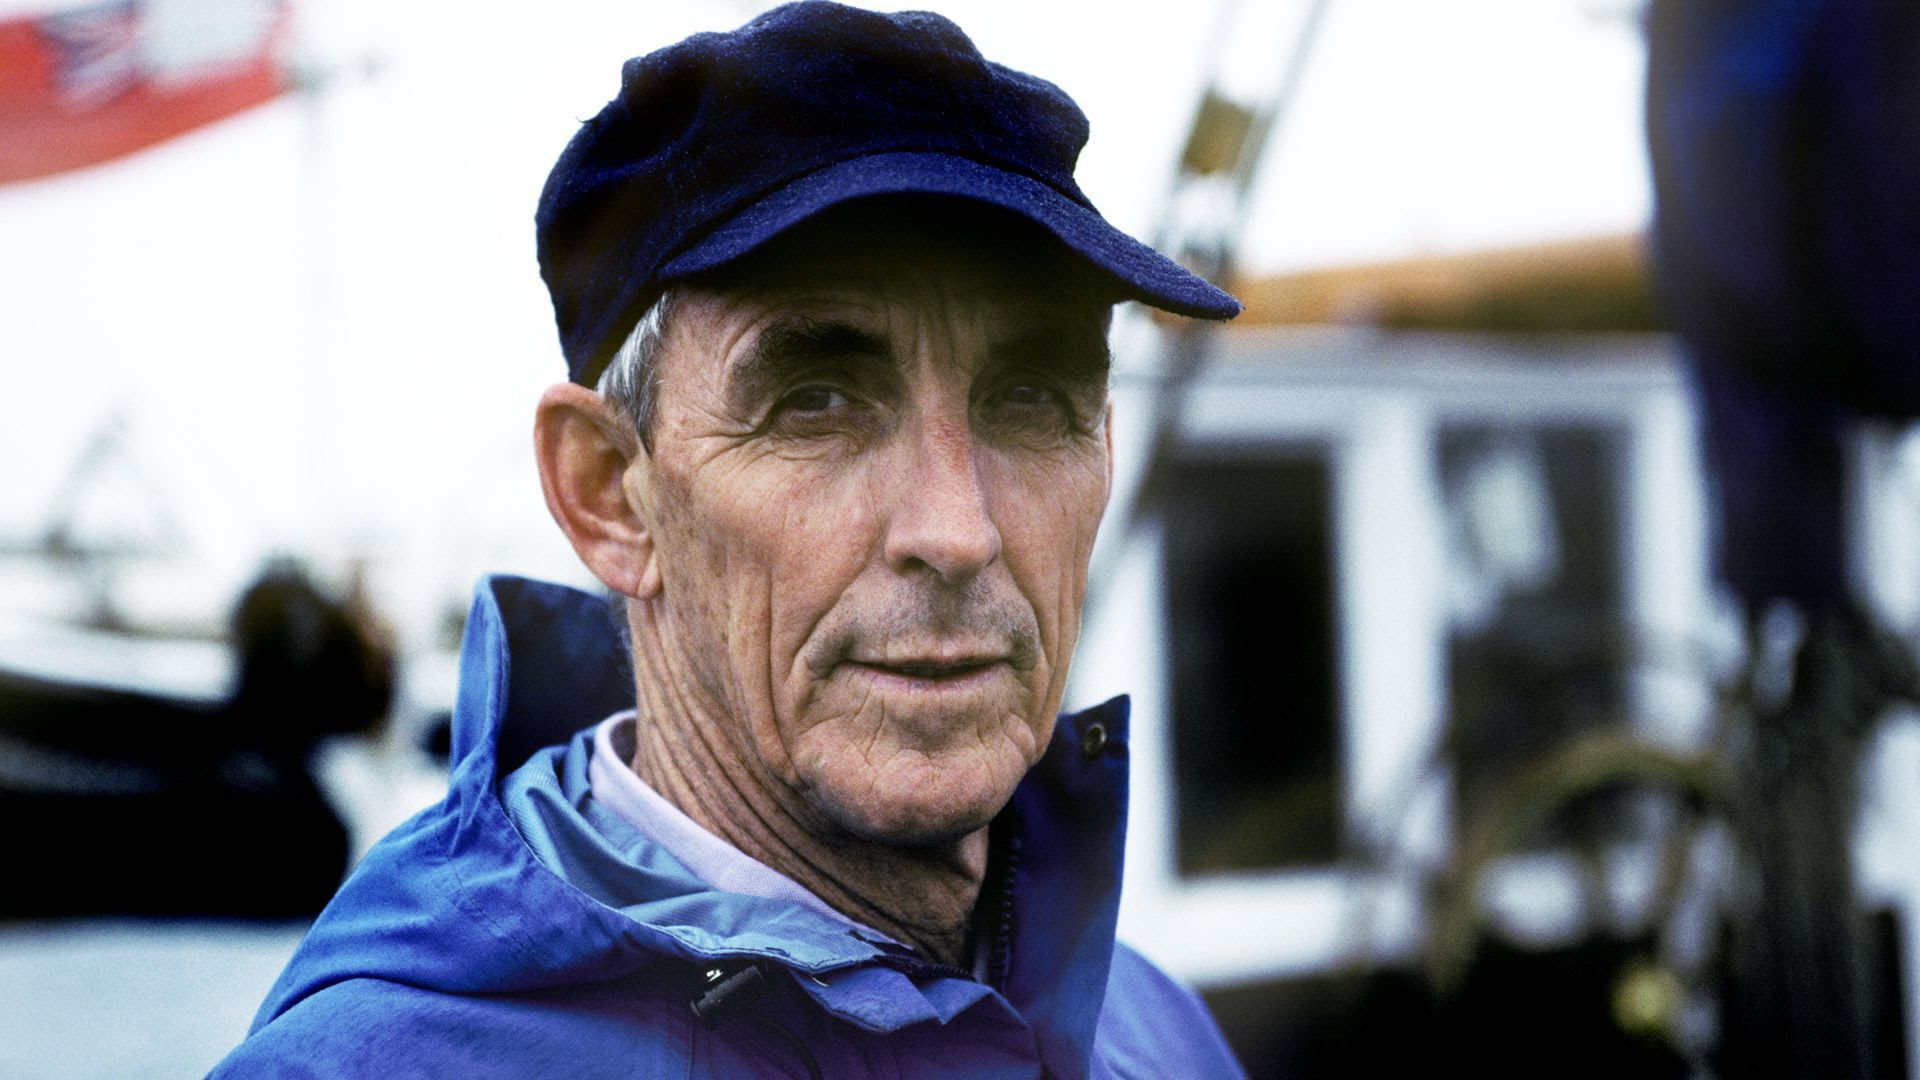 A portrait of the author Peter Matthiesen in 1992 wearing a blue windbreaker.